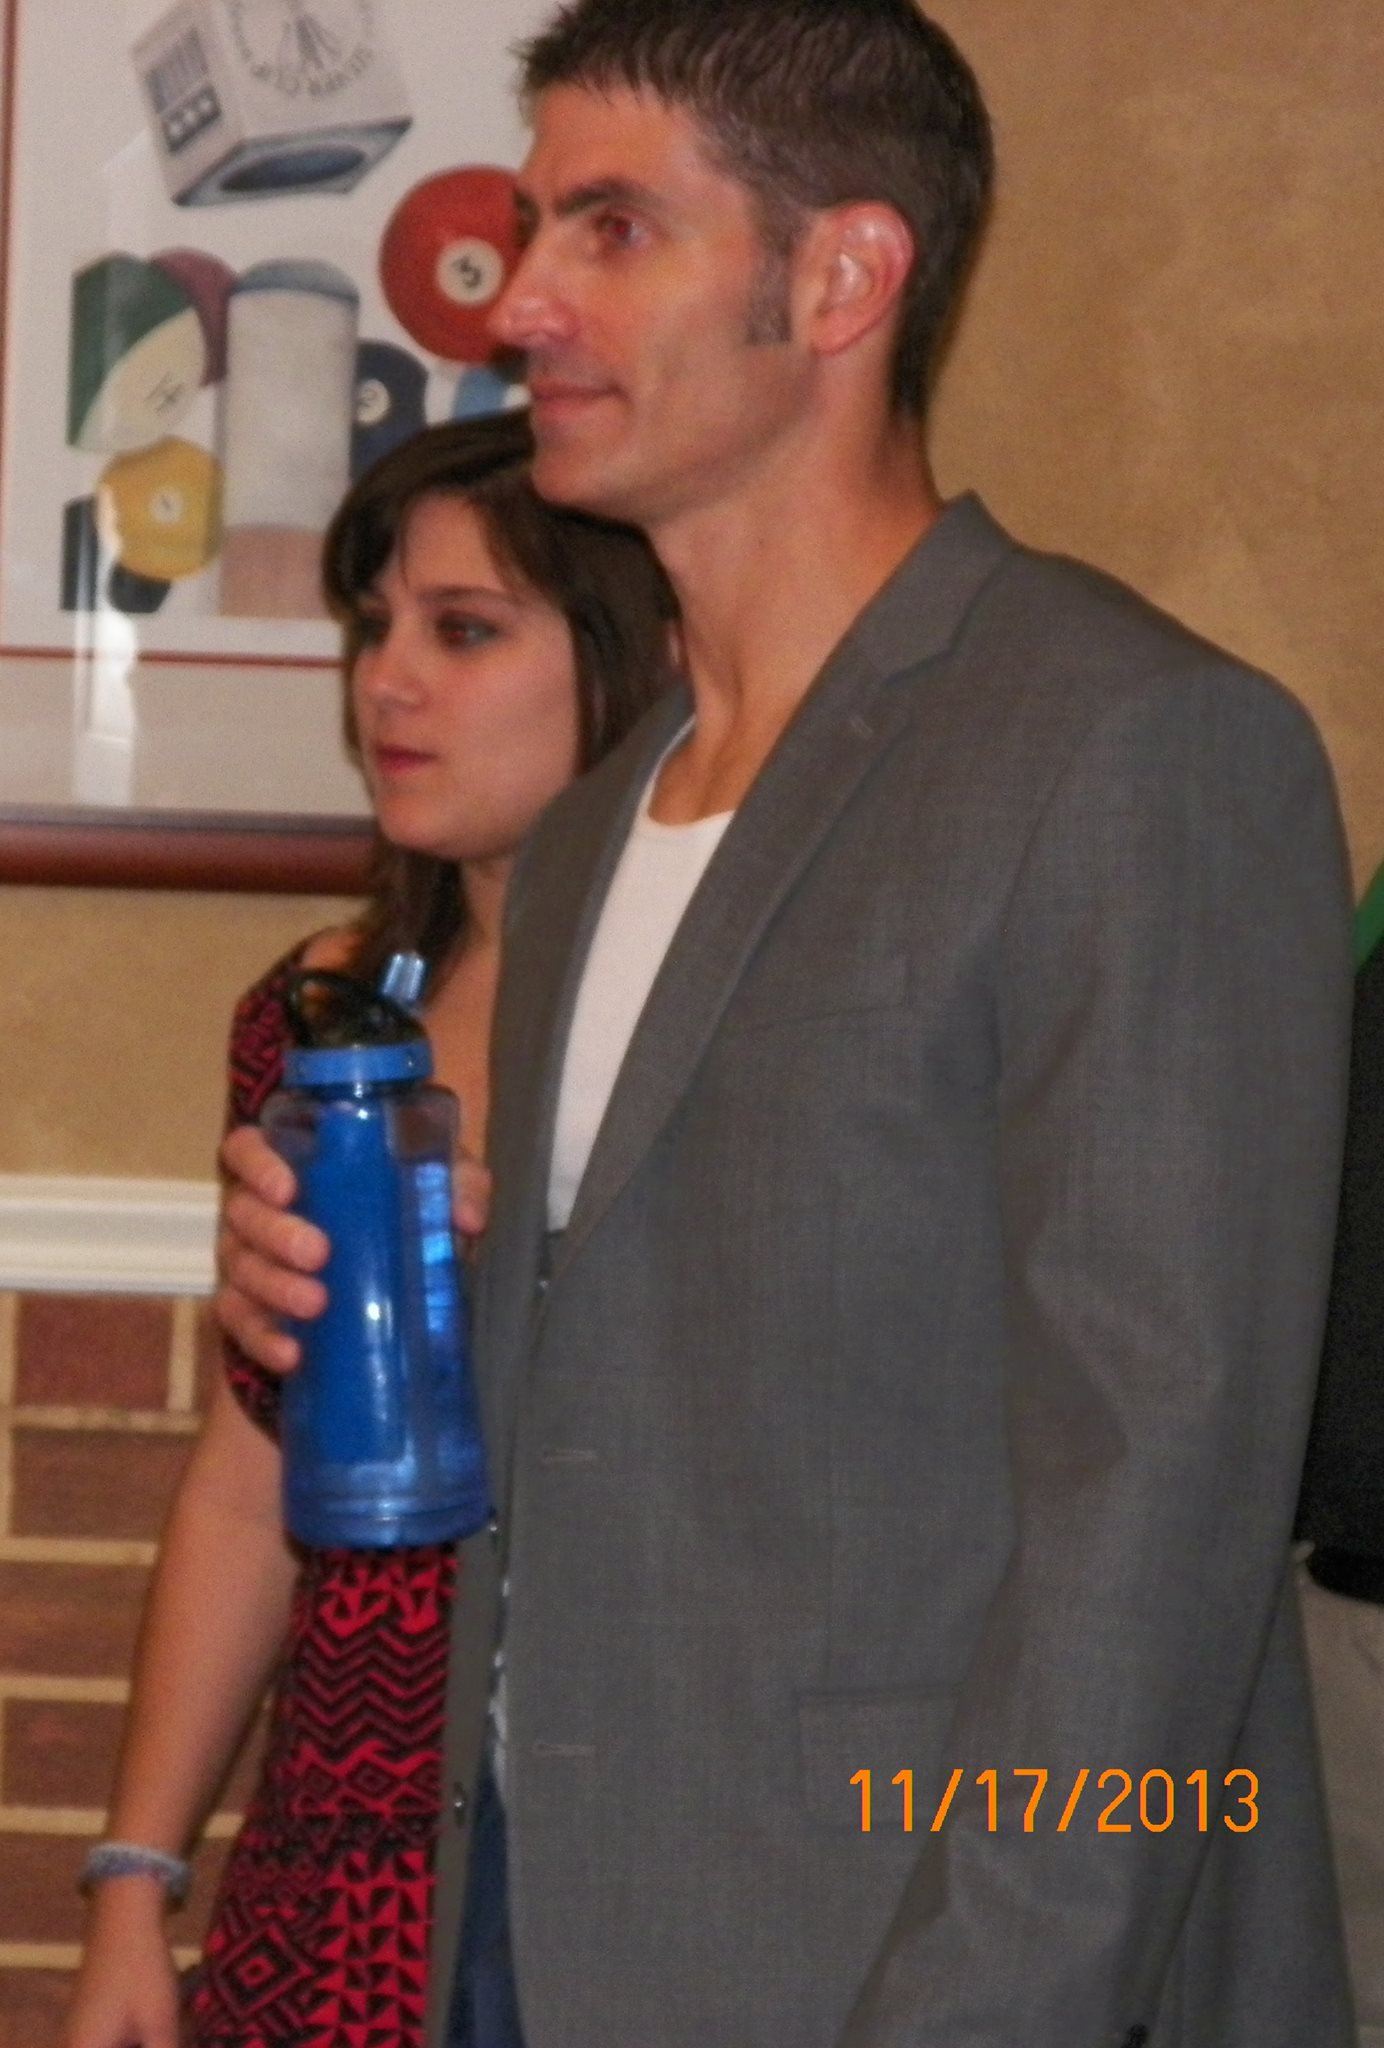 Producer and Actor David and Actress Ashley